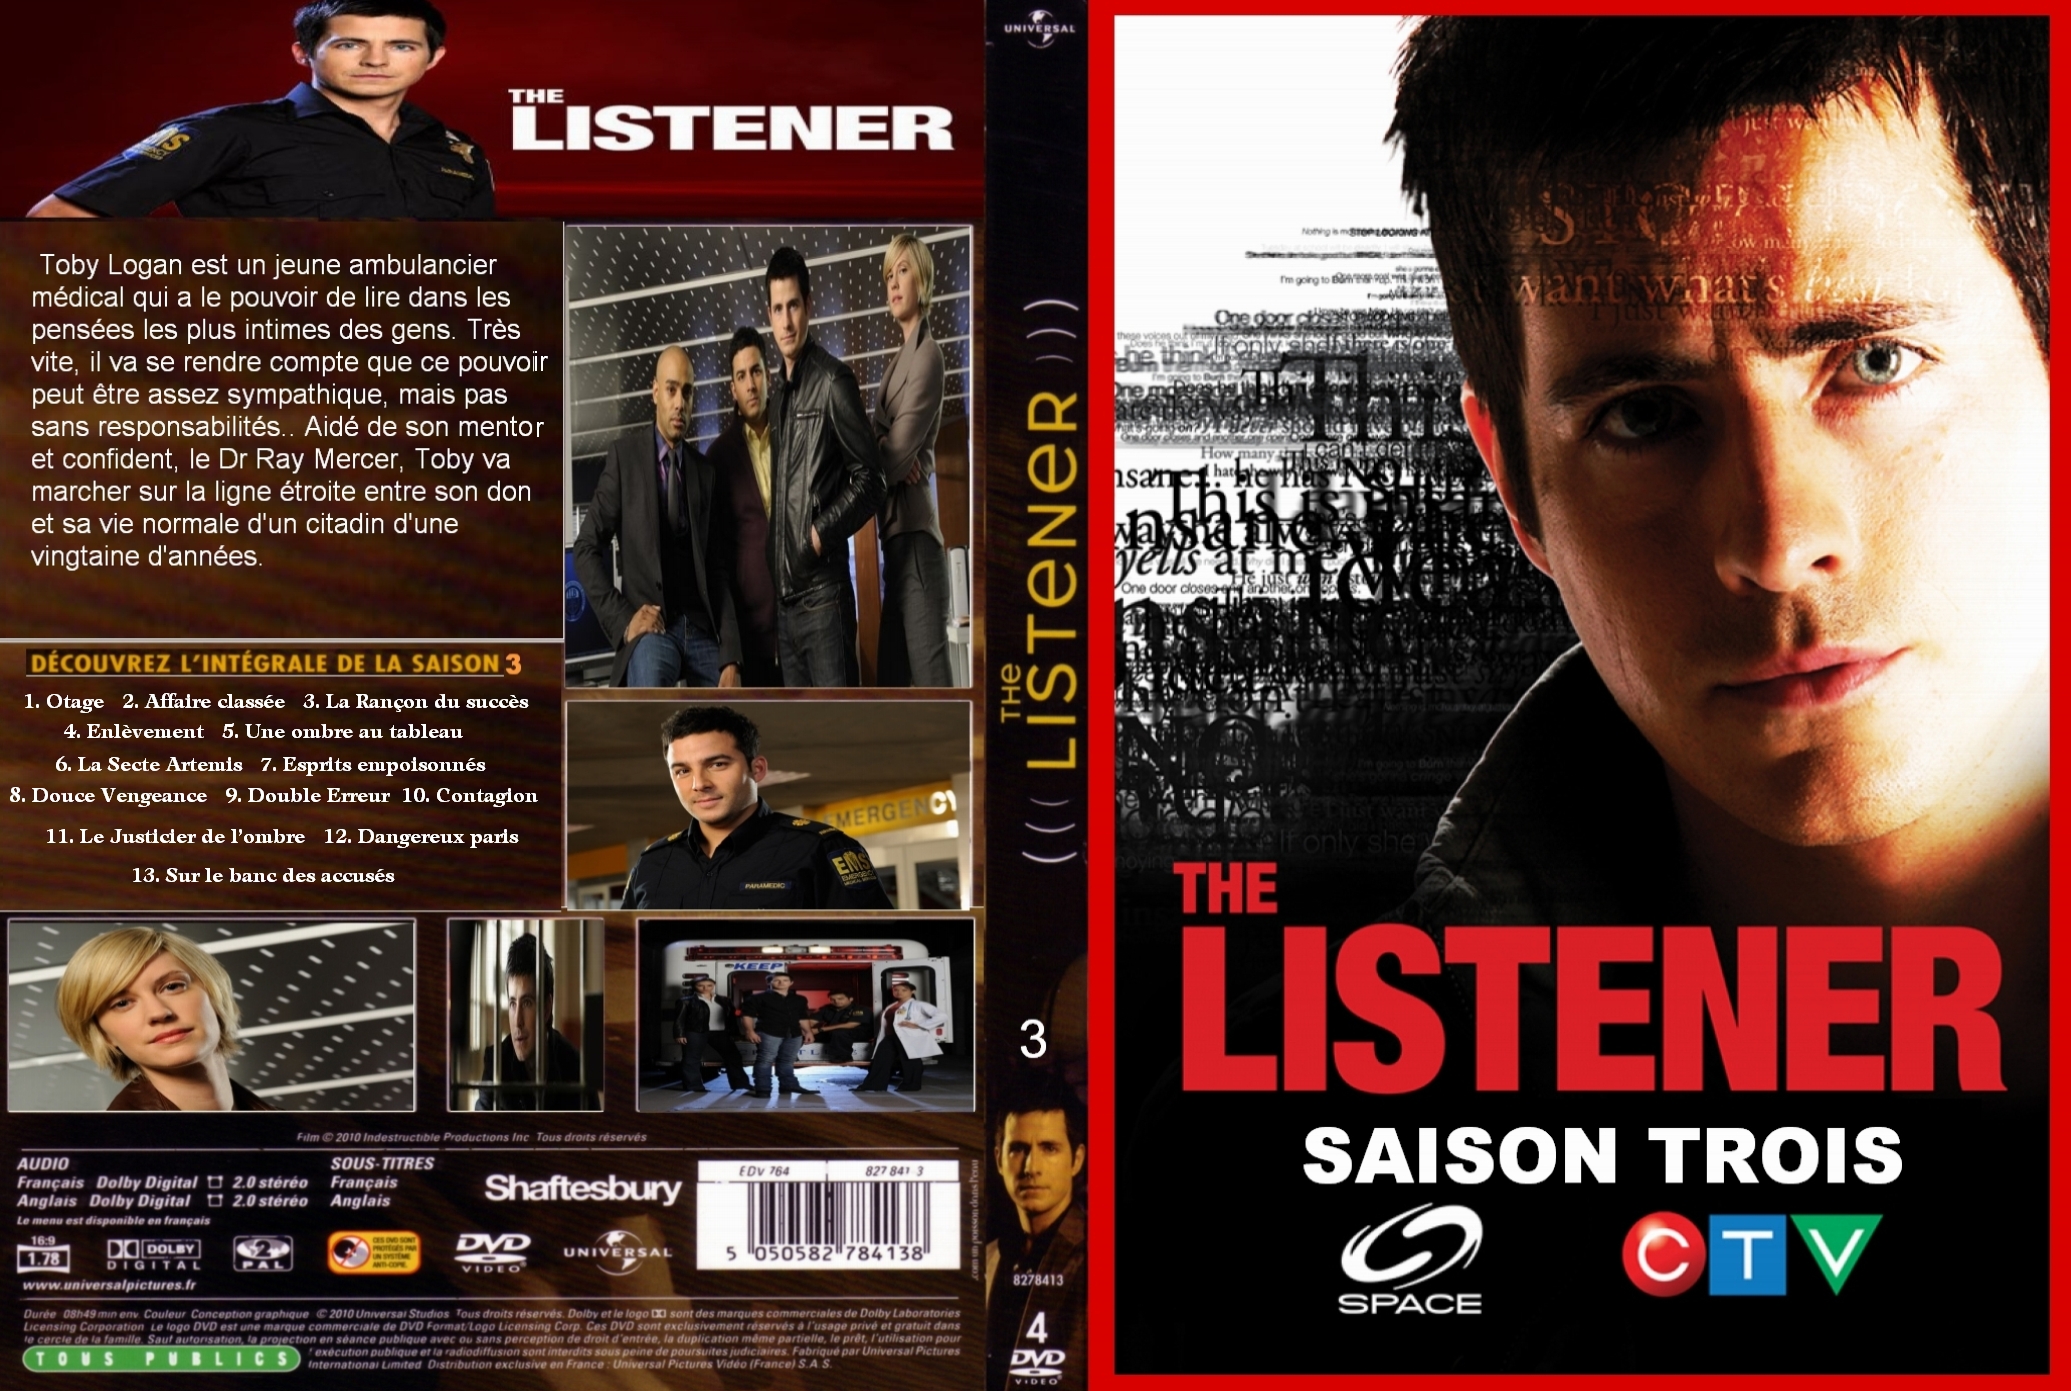 Jaquette DVD The Listener saison 3 custom